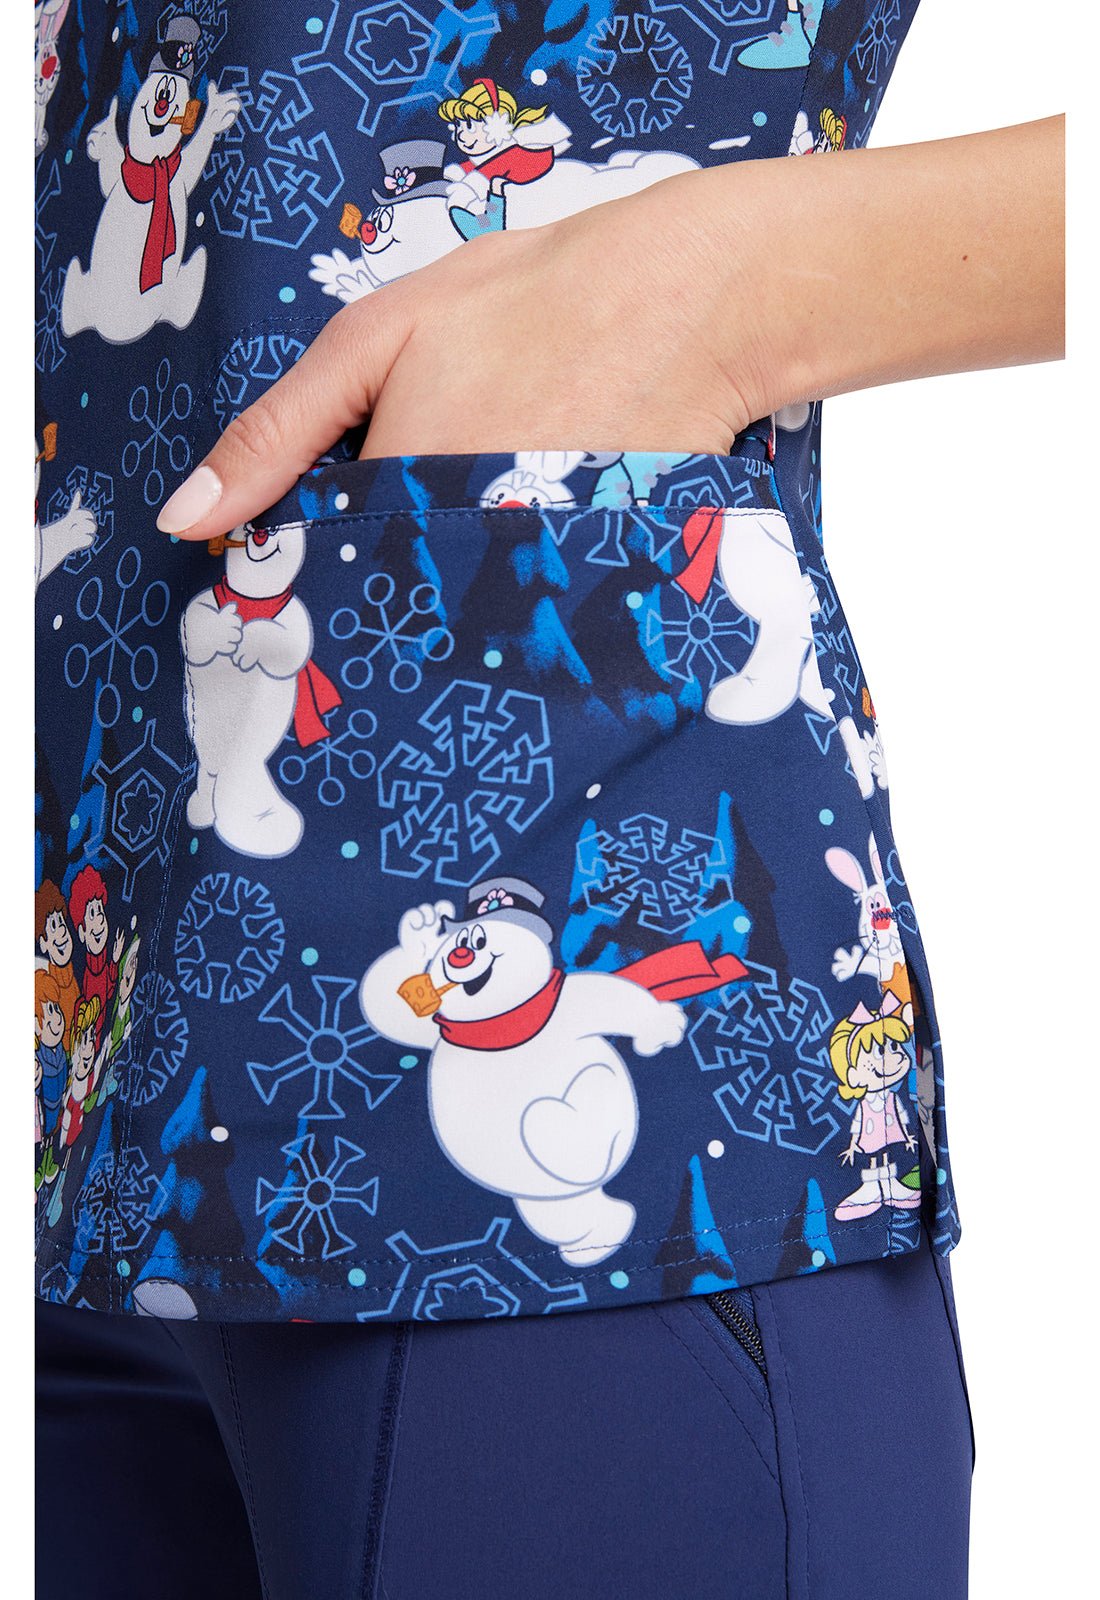 Frosty The Snowman Cherokee Tooniforms Christmas V Neck Scrub Top TF666 FRSAC - Scrubs Select